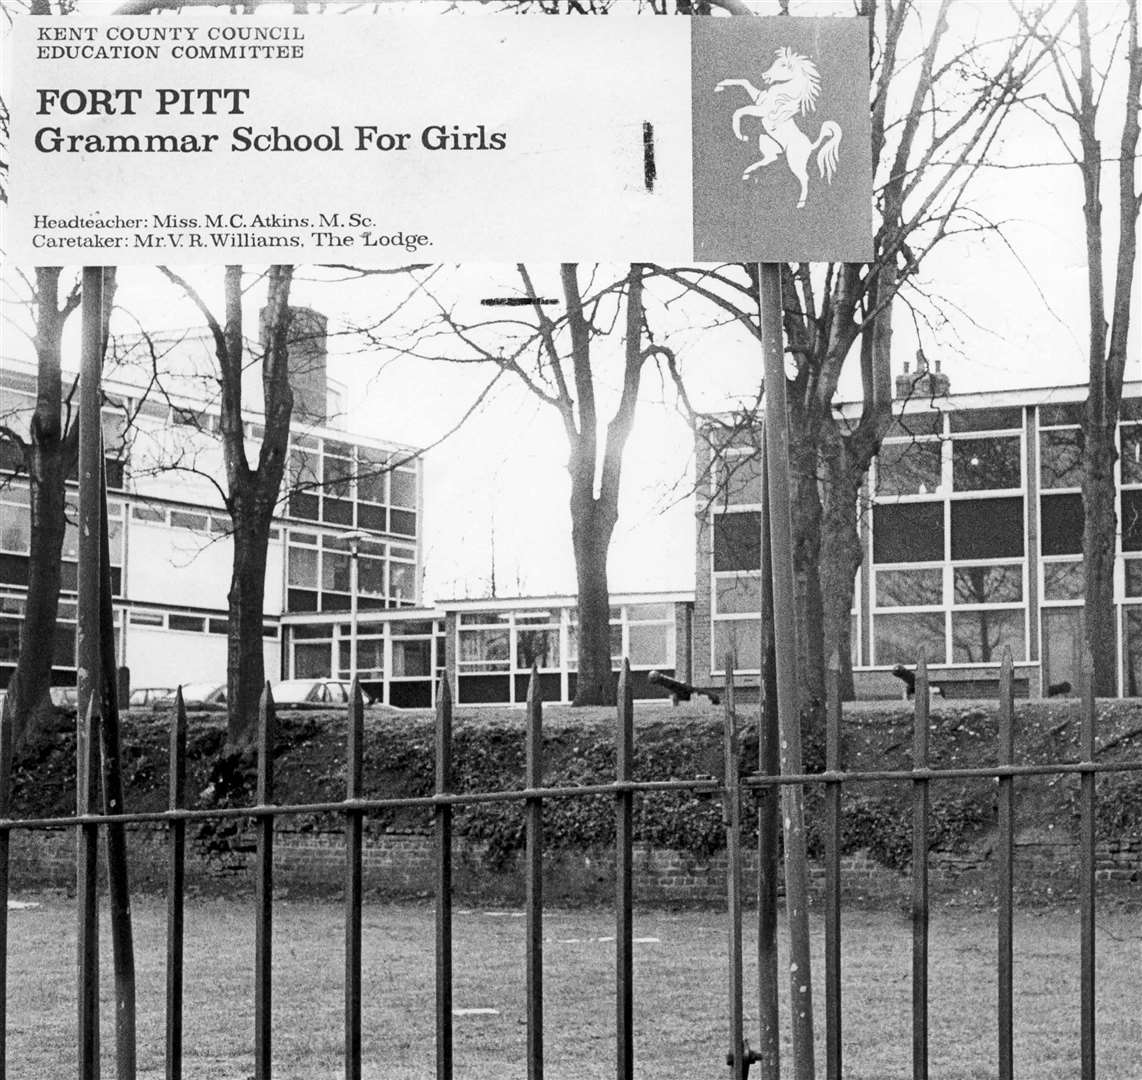 Fort Pitt Grammar School for Girls pictured in February 1987